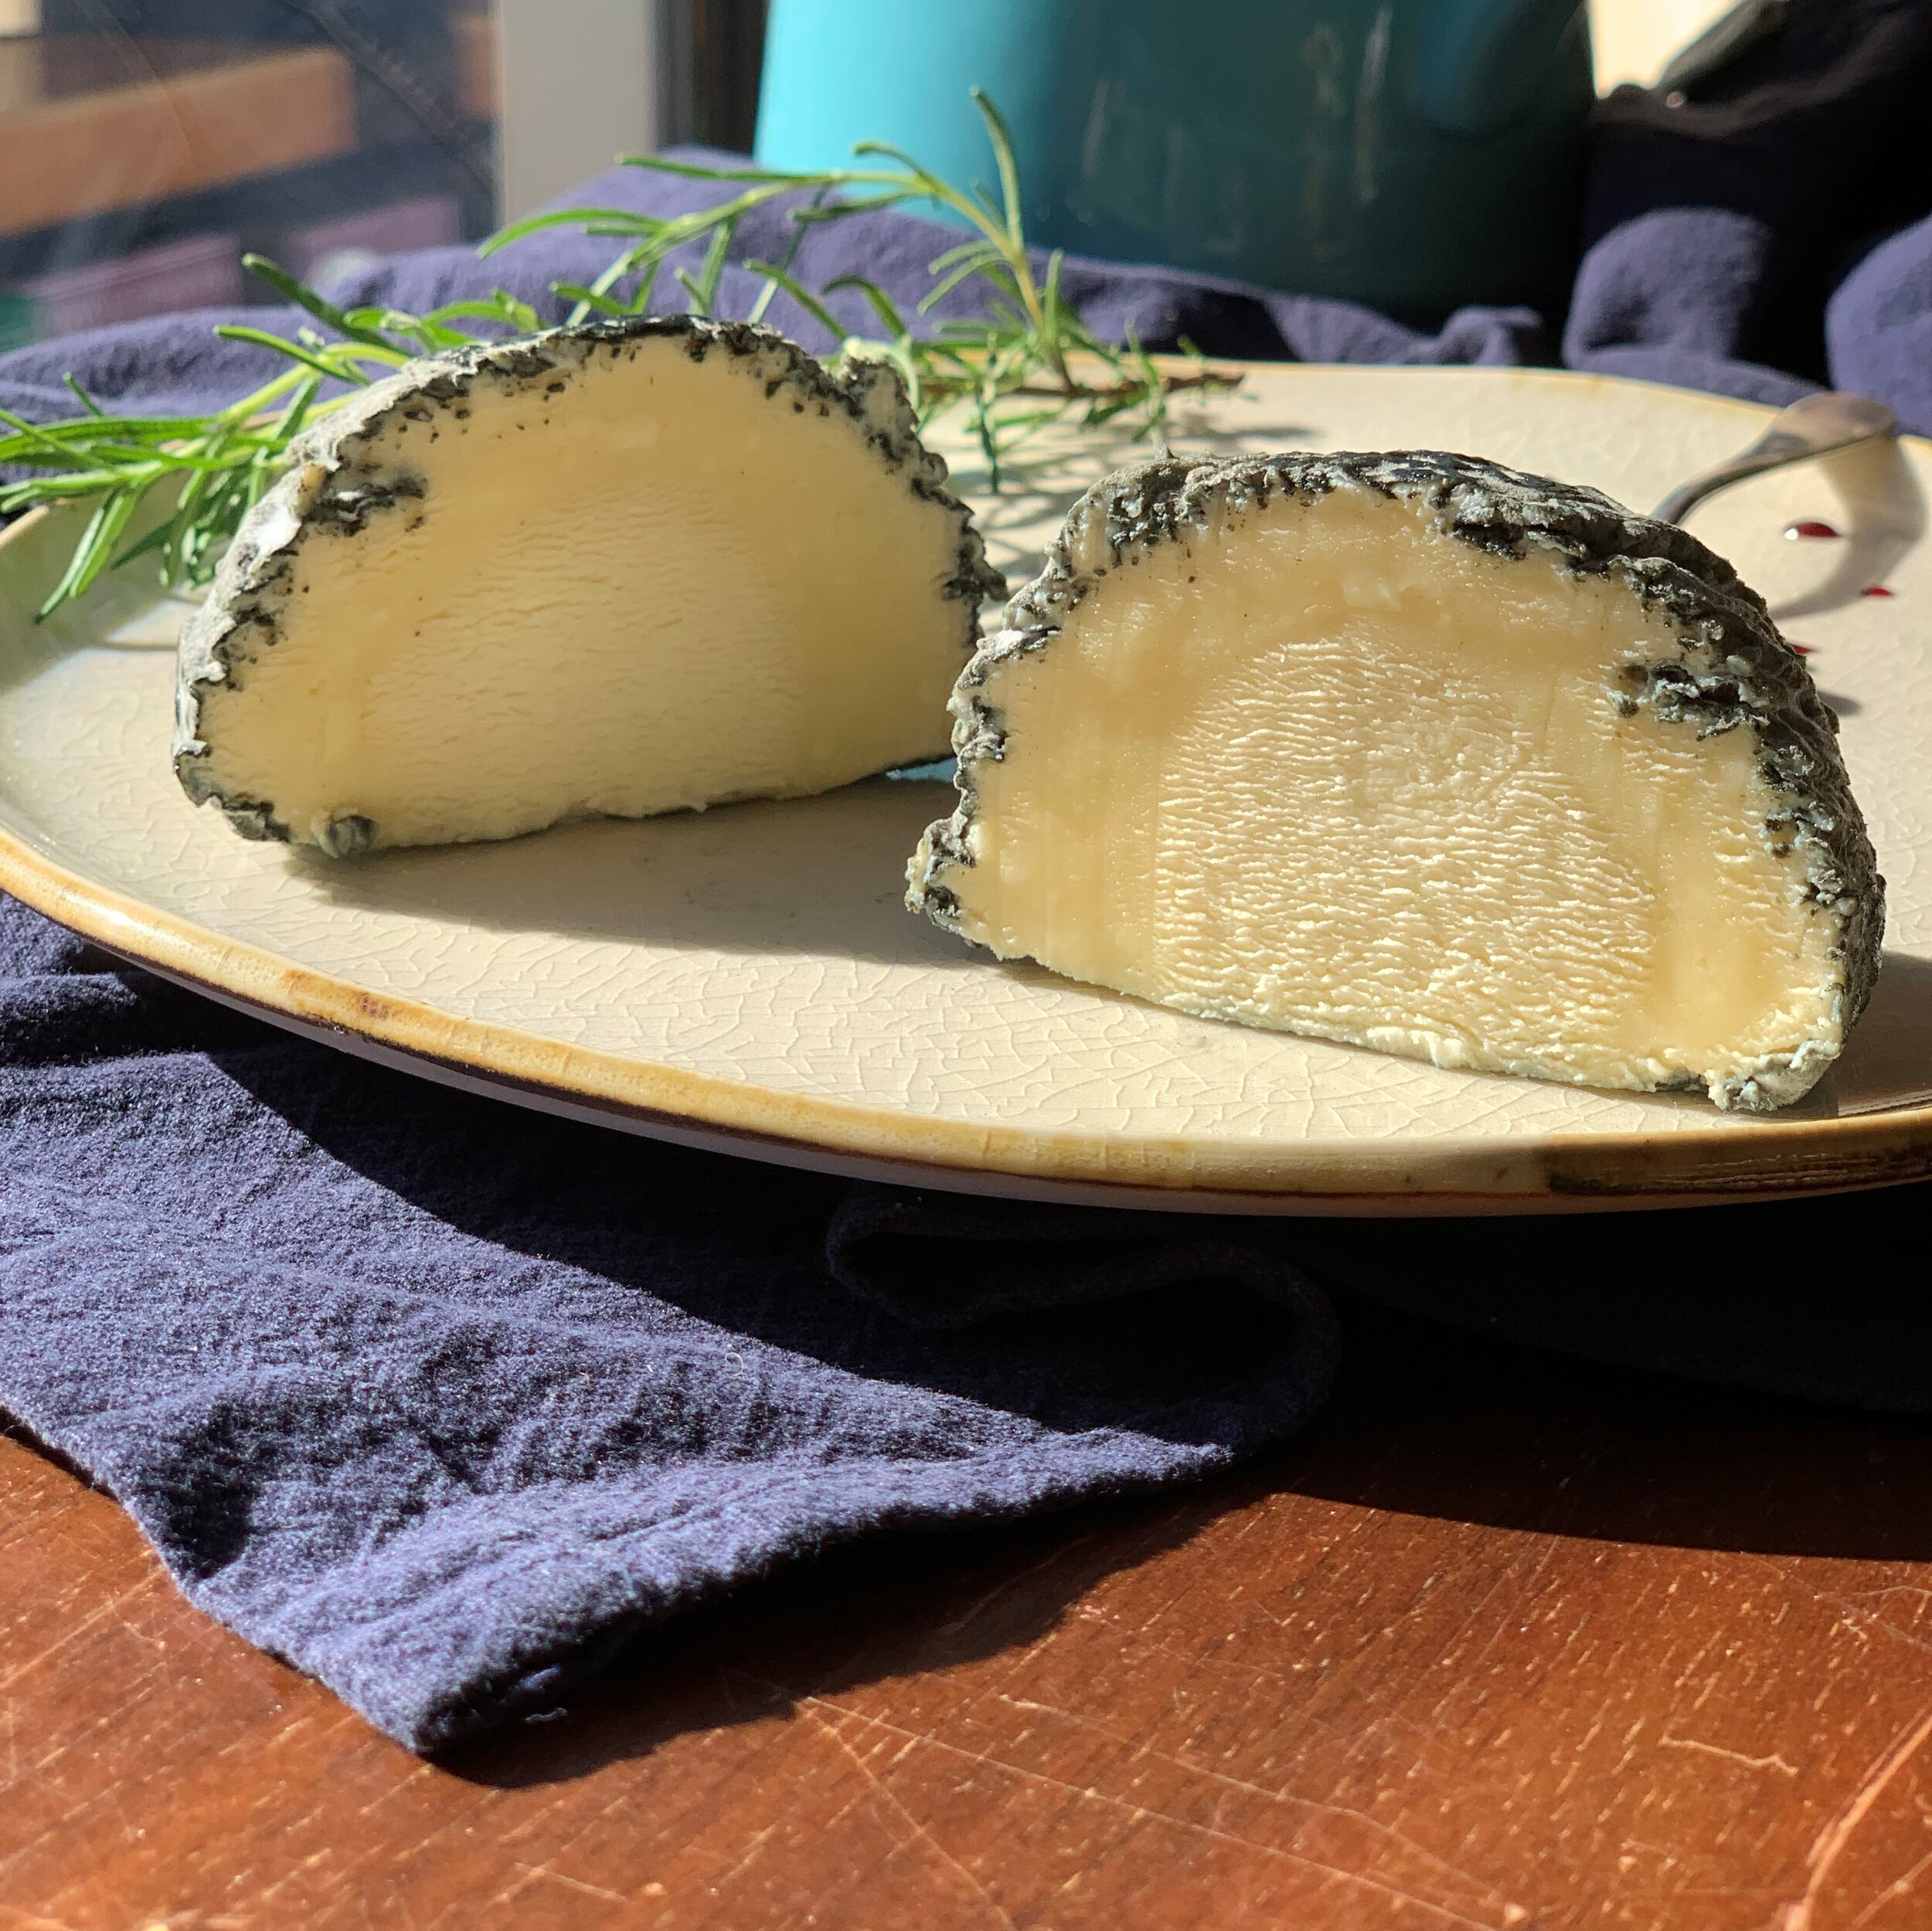 Fine Artisan Cheeses